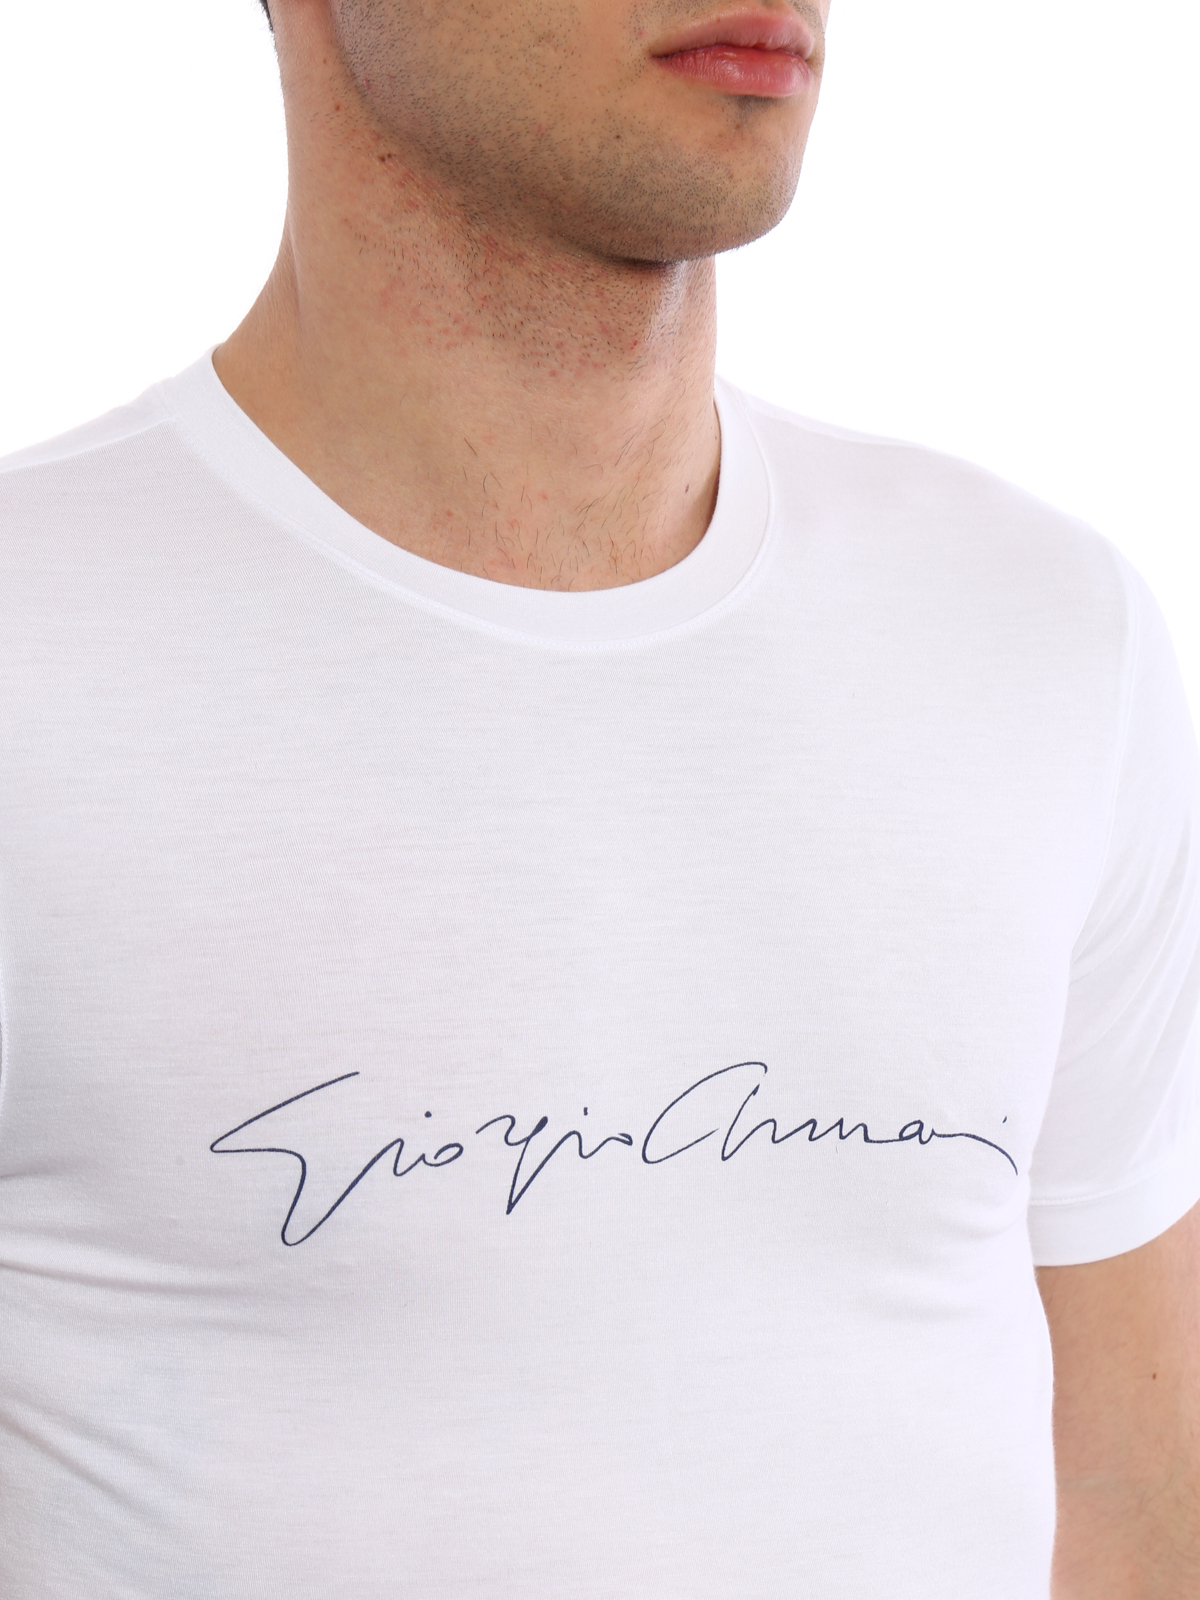 armani signature t shirt